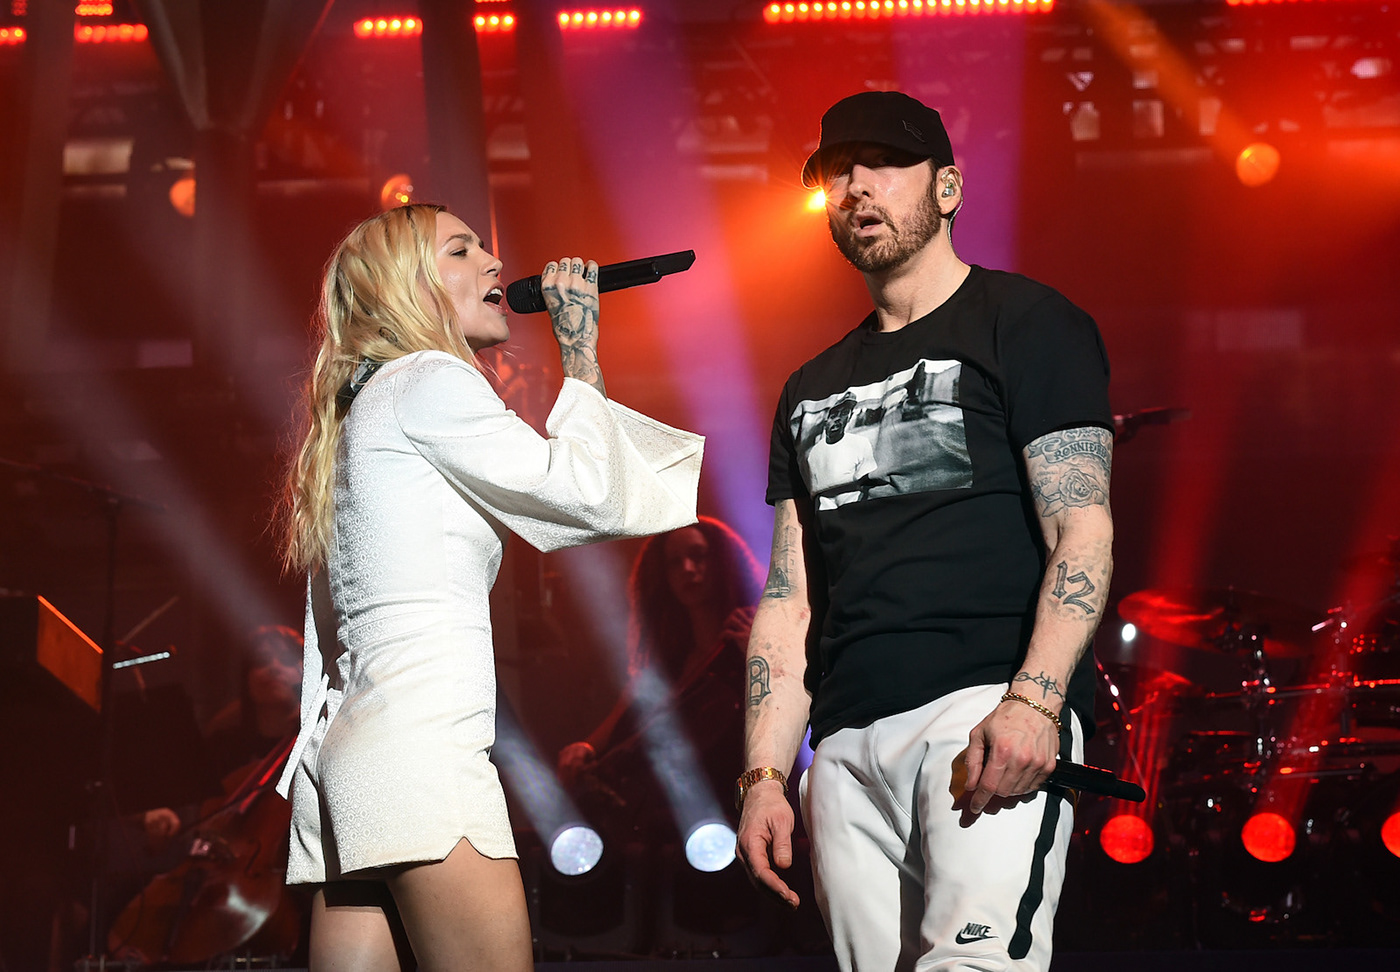 Only three and a half weeks before Eminem’s Coachella headline performance ...